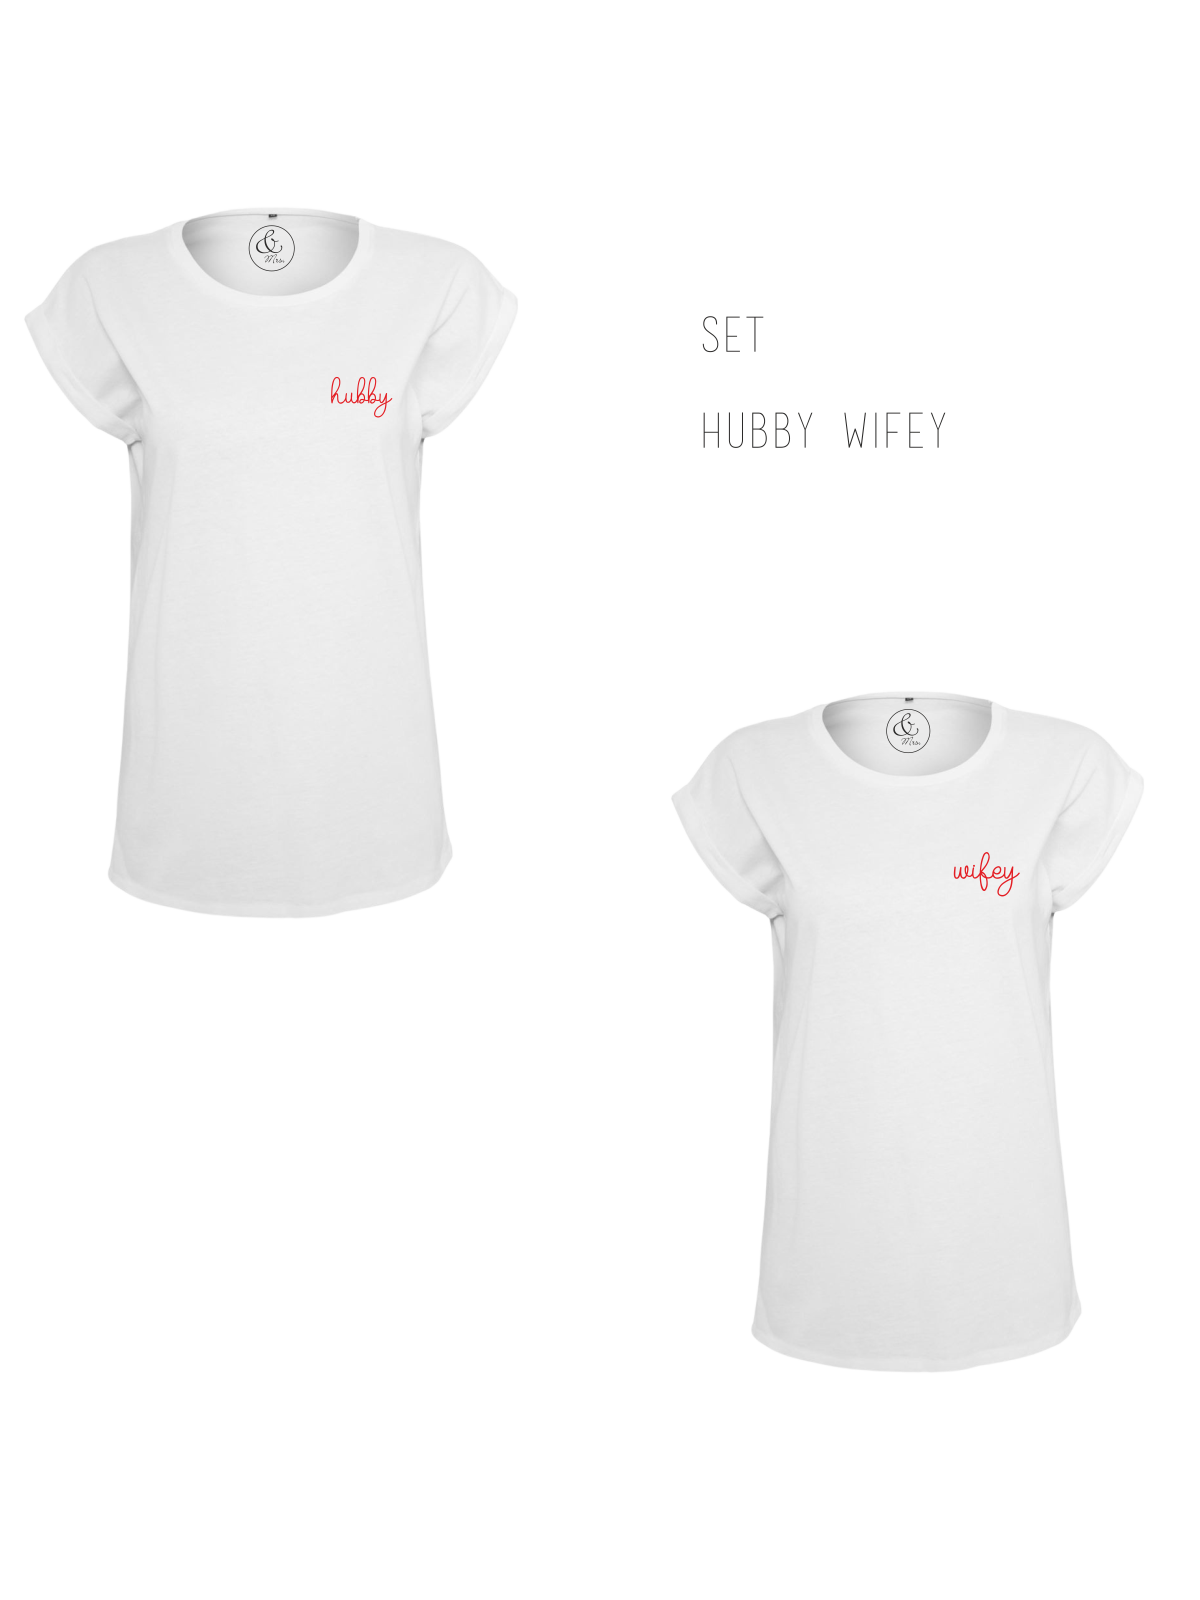 T- Shirt Set Hubby Wifey